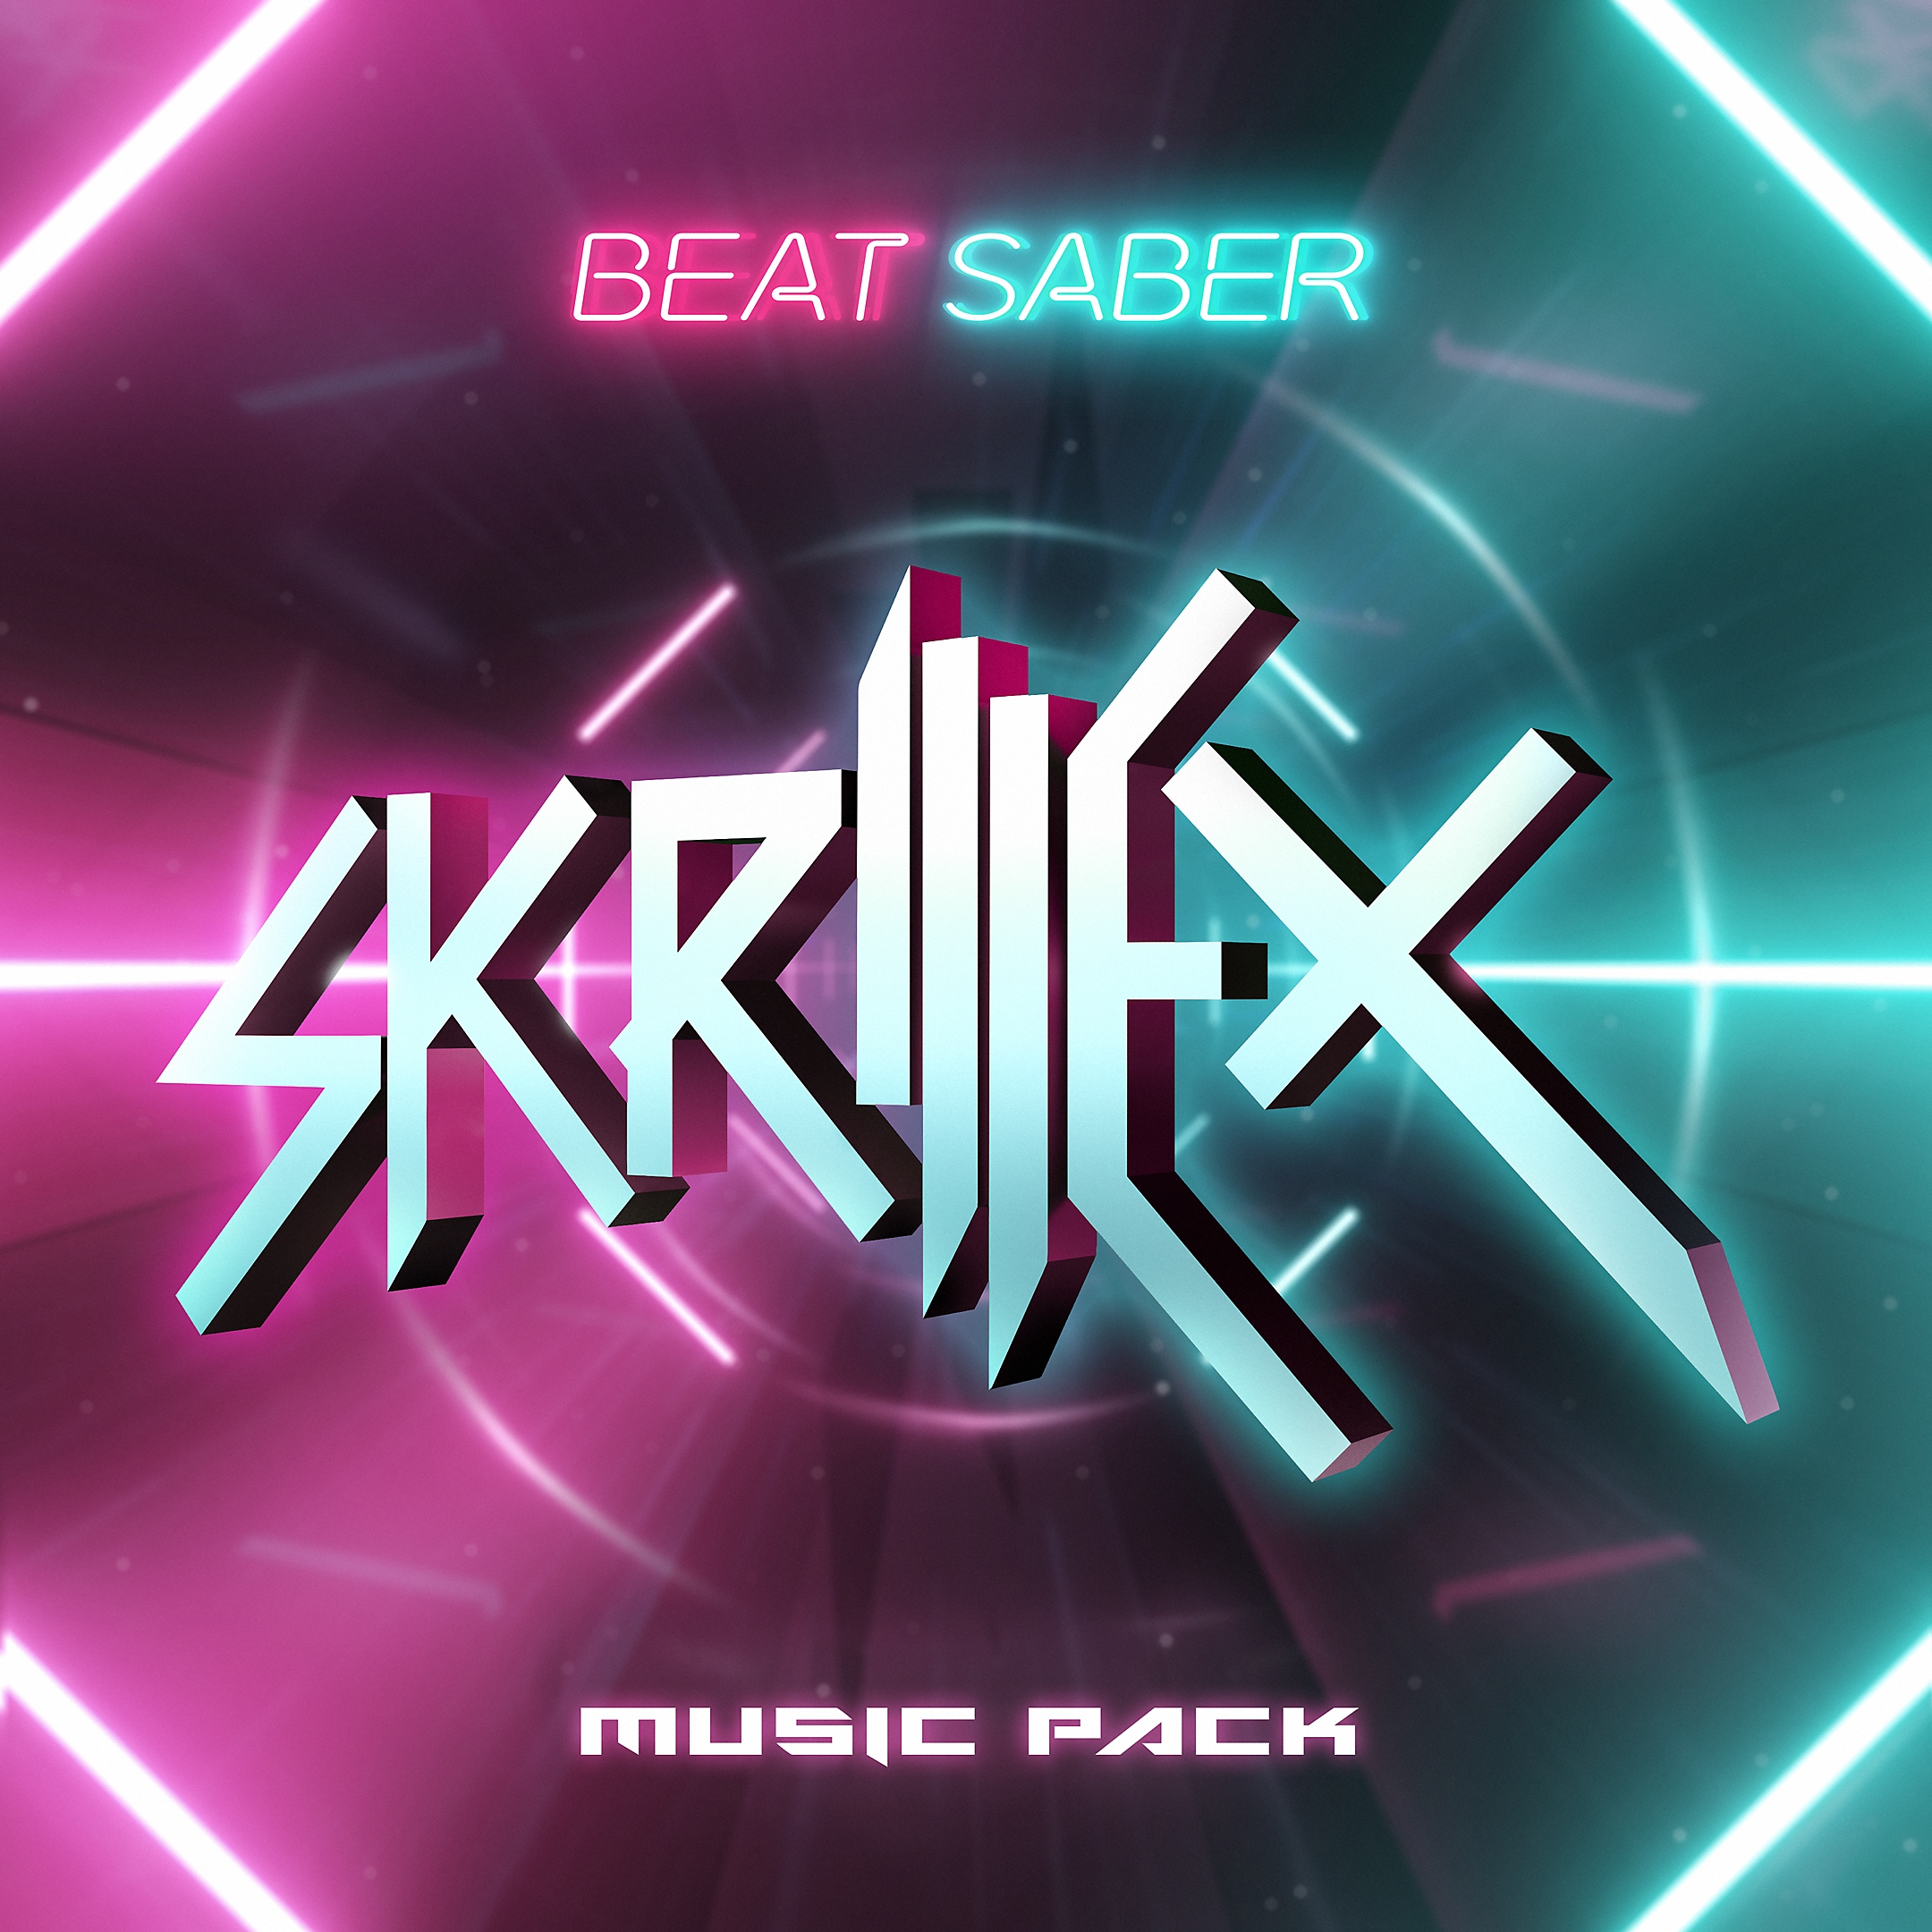 Hudební balíček Beat Saber Skrillex Music Pack